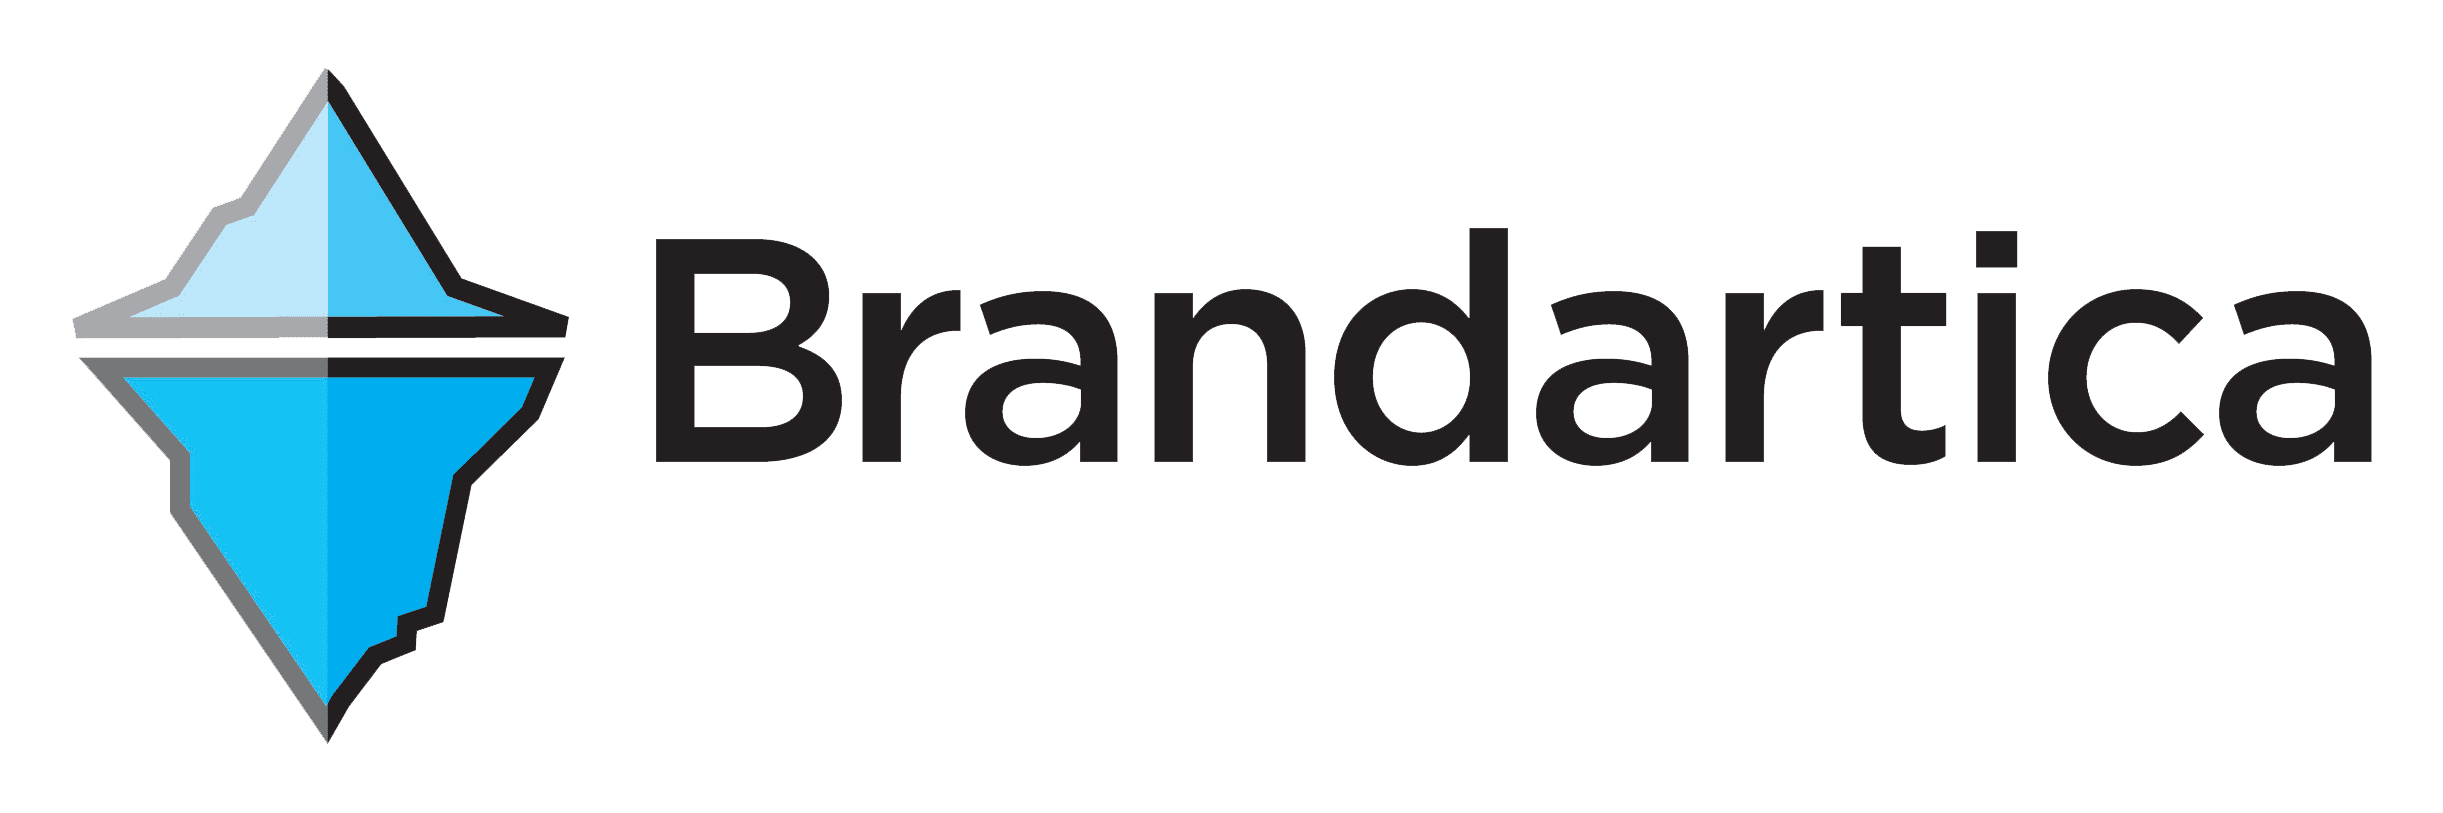 Brandartica | Product Marketing Agency NH